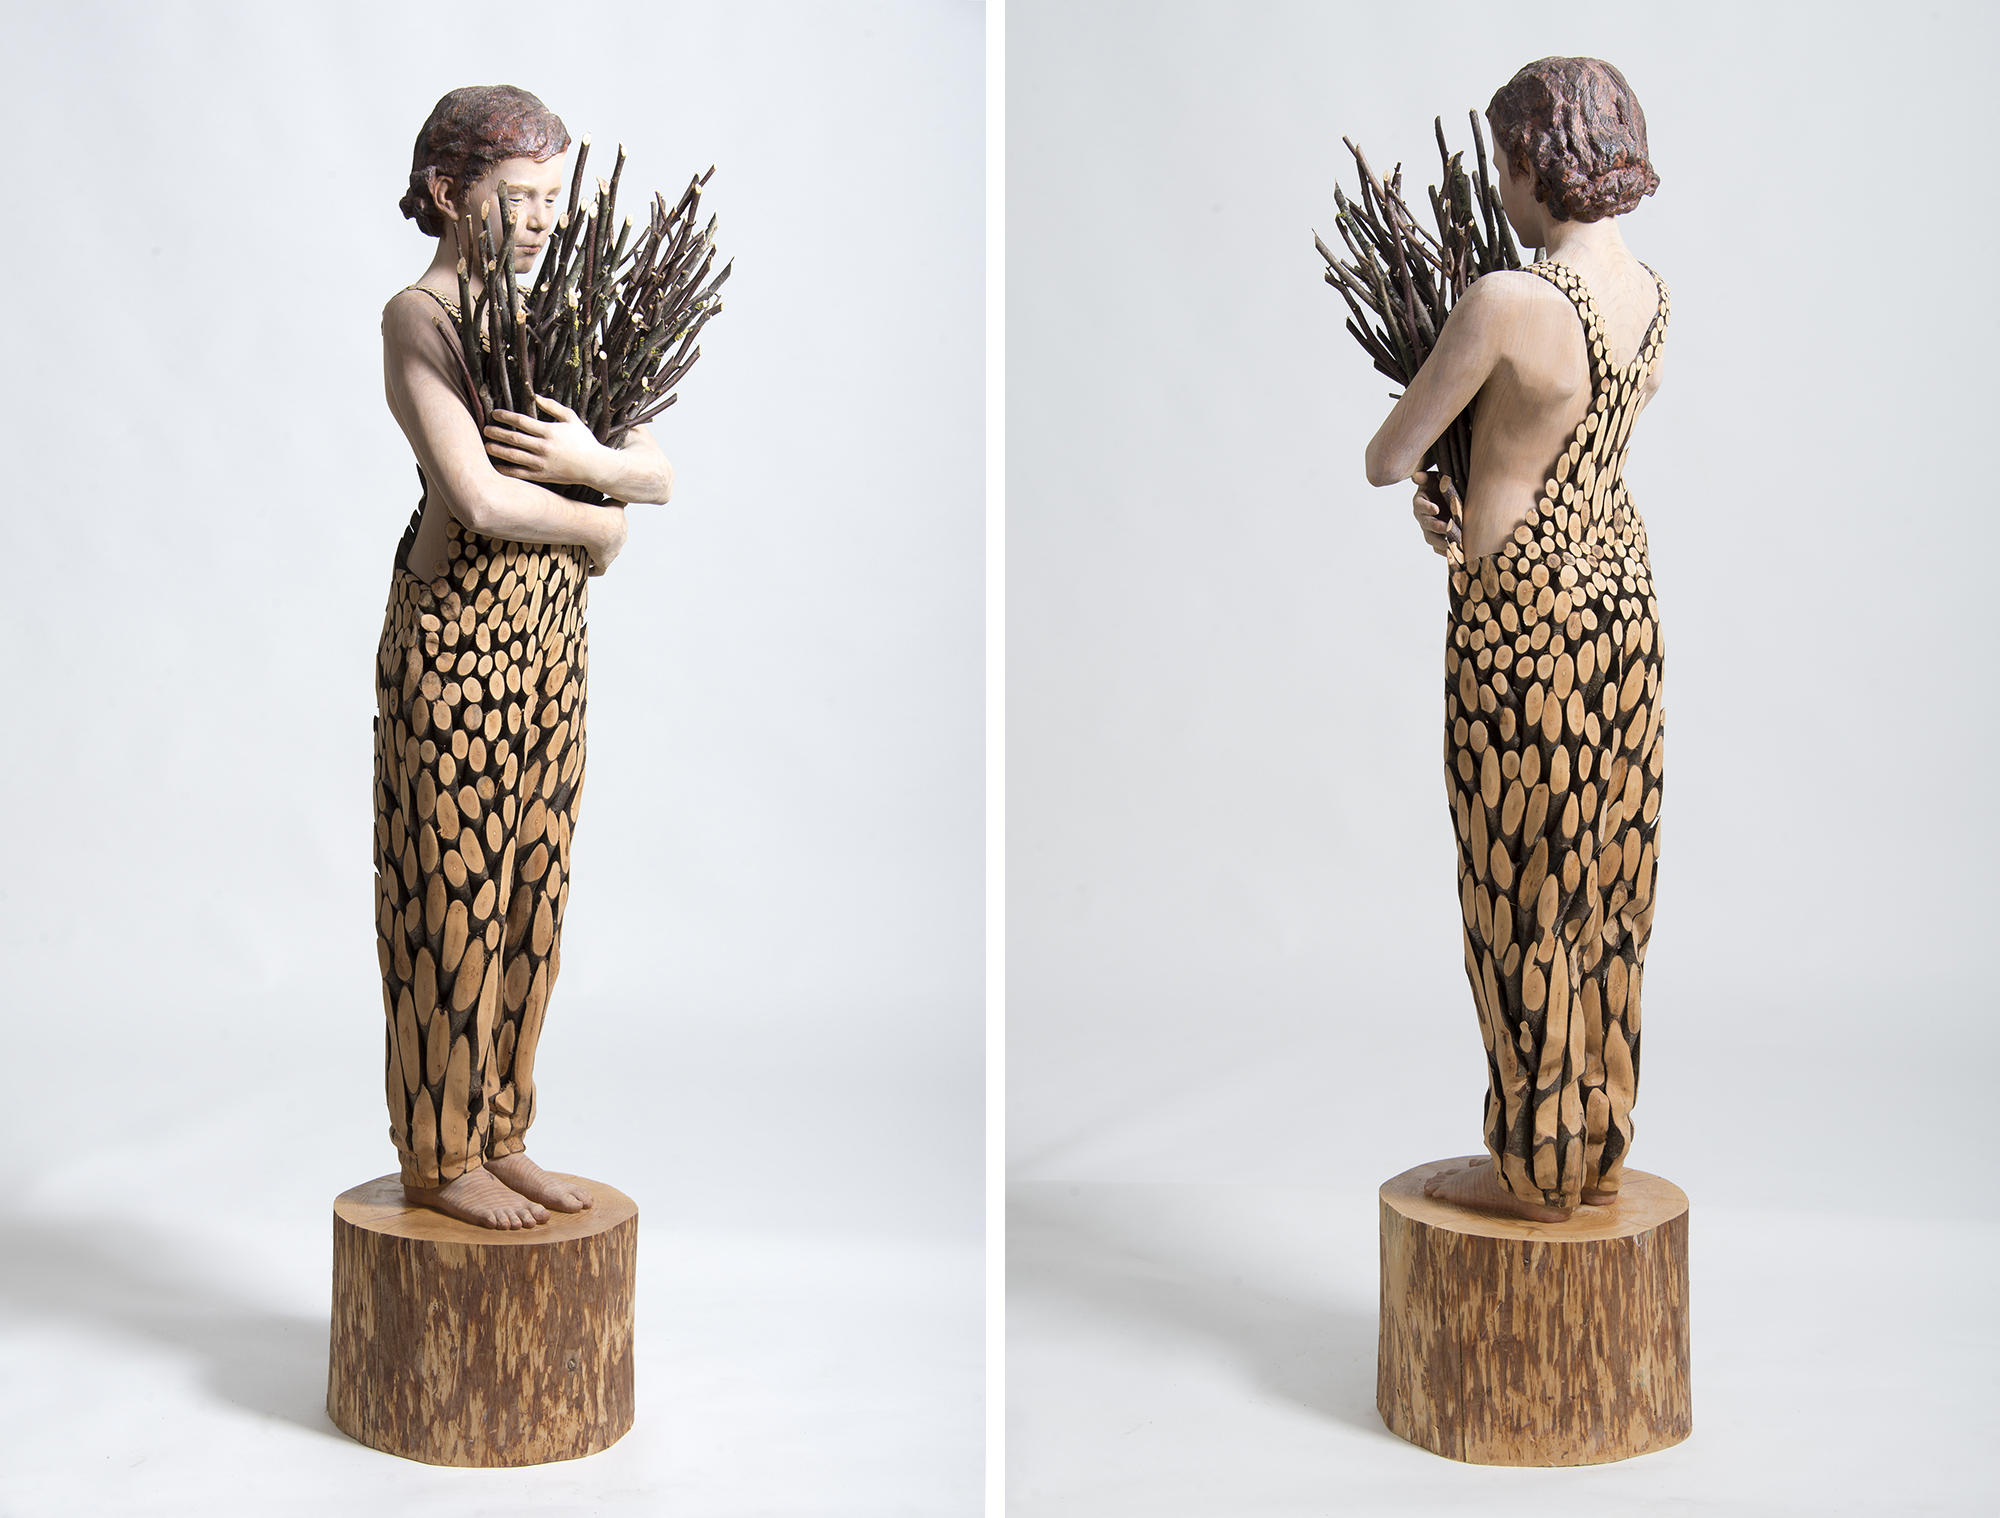 Playfulness and Imagination Inform the Textured Wooden Sculptures of Artist Efraïm Rodríguez | 国外美陈 美陈网站 美陈前沿 